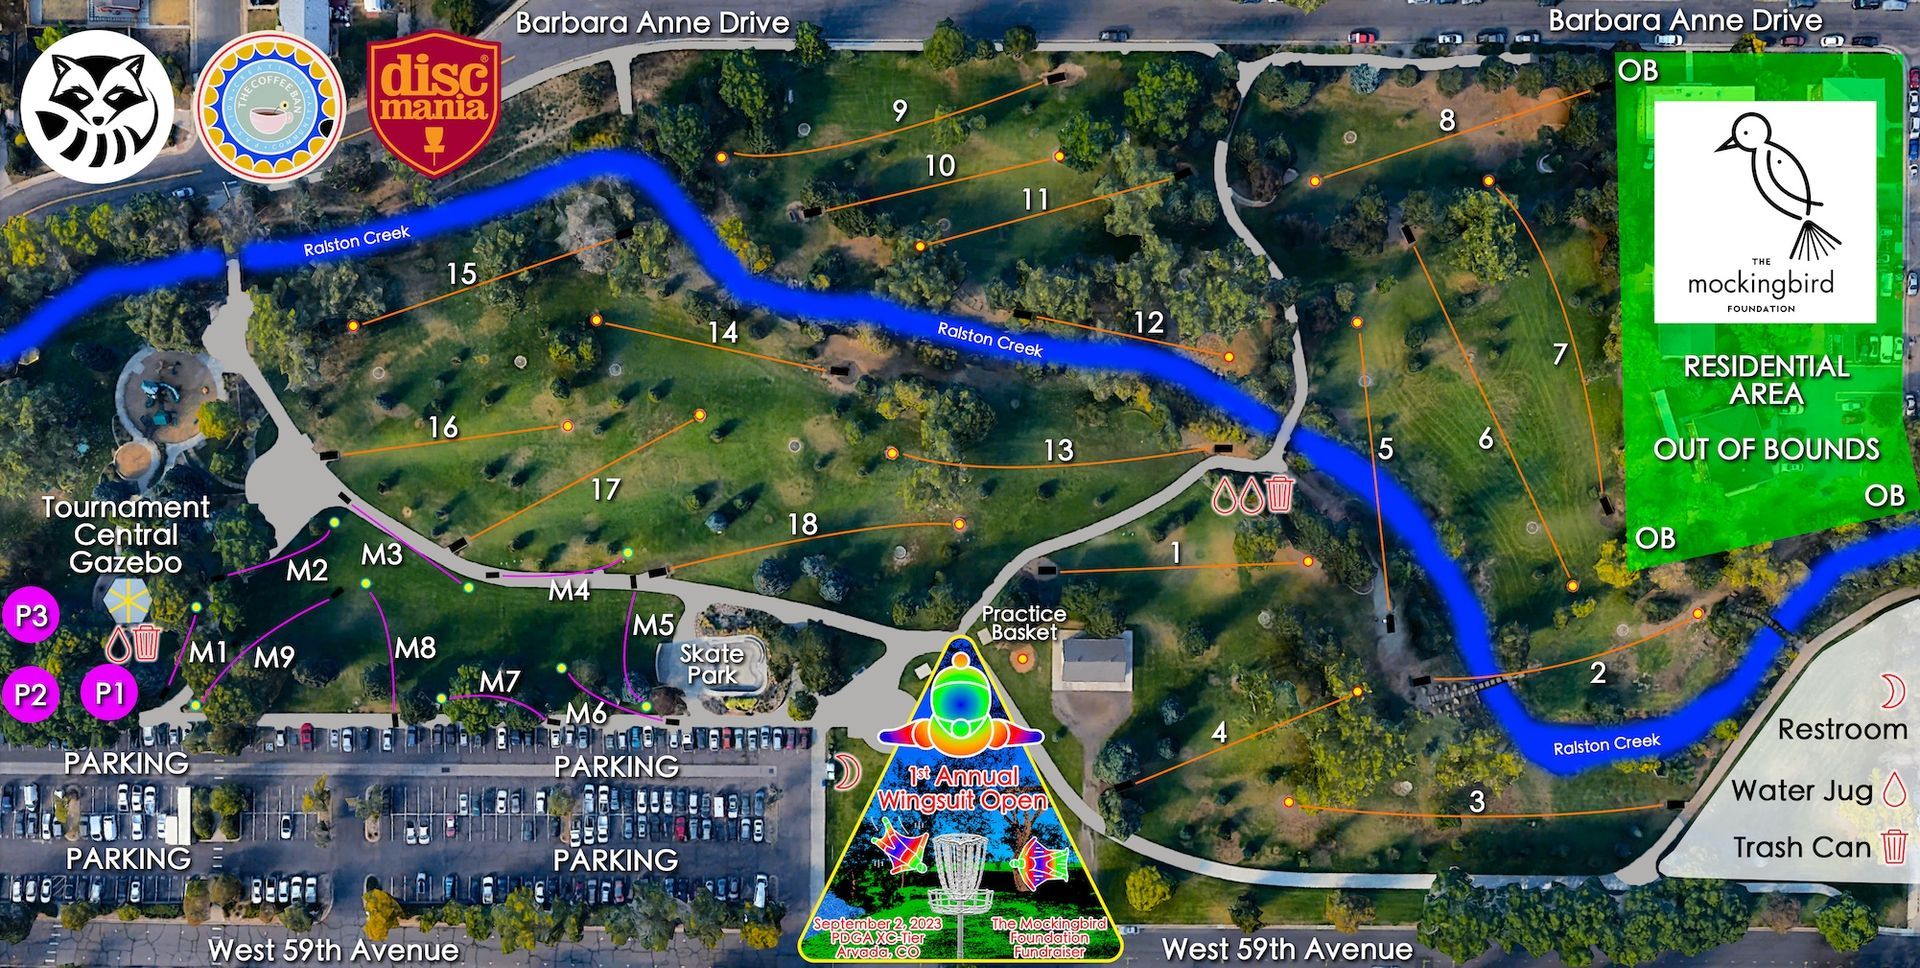 1st Wingsuit Open disc golf tournament course map v2